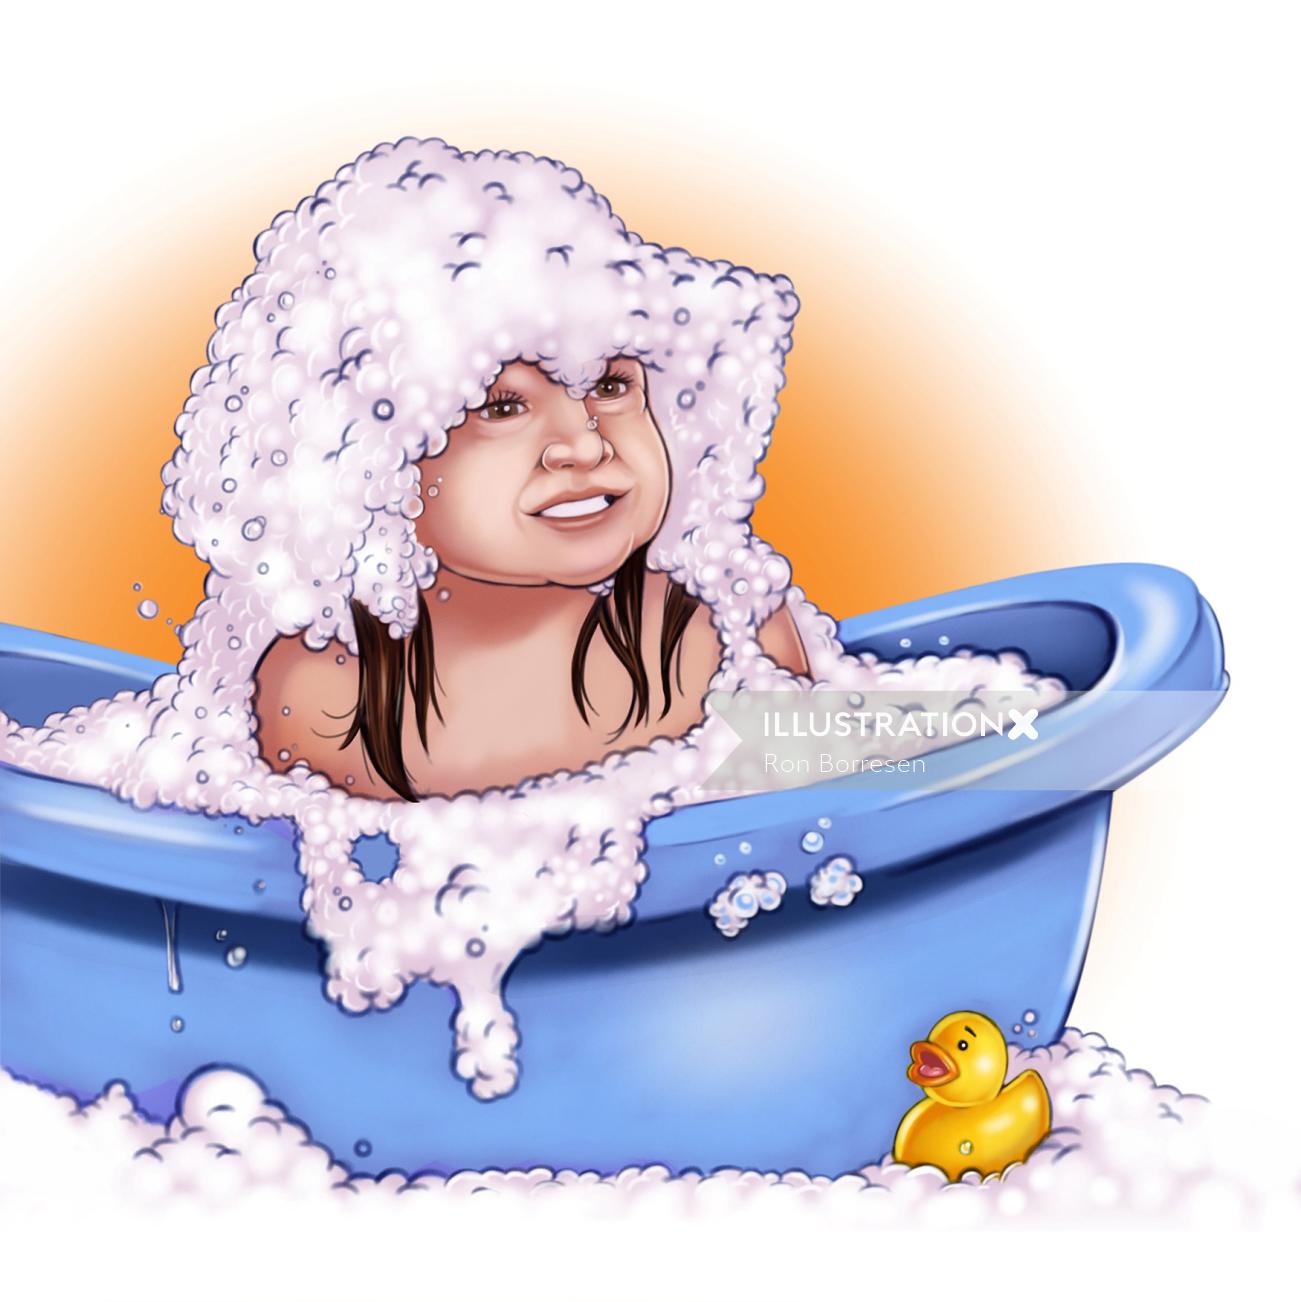 Character design of girl bubble bath
